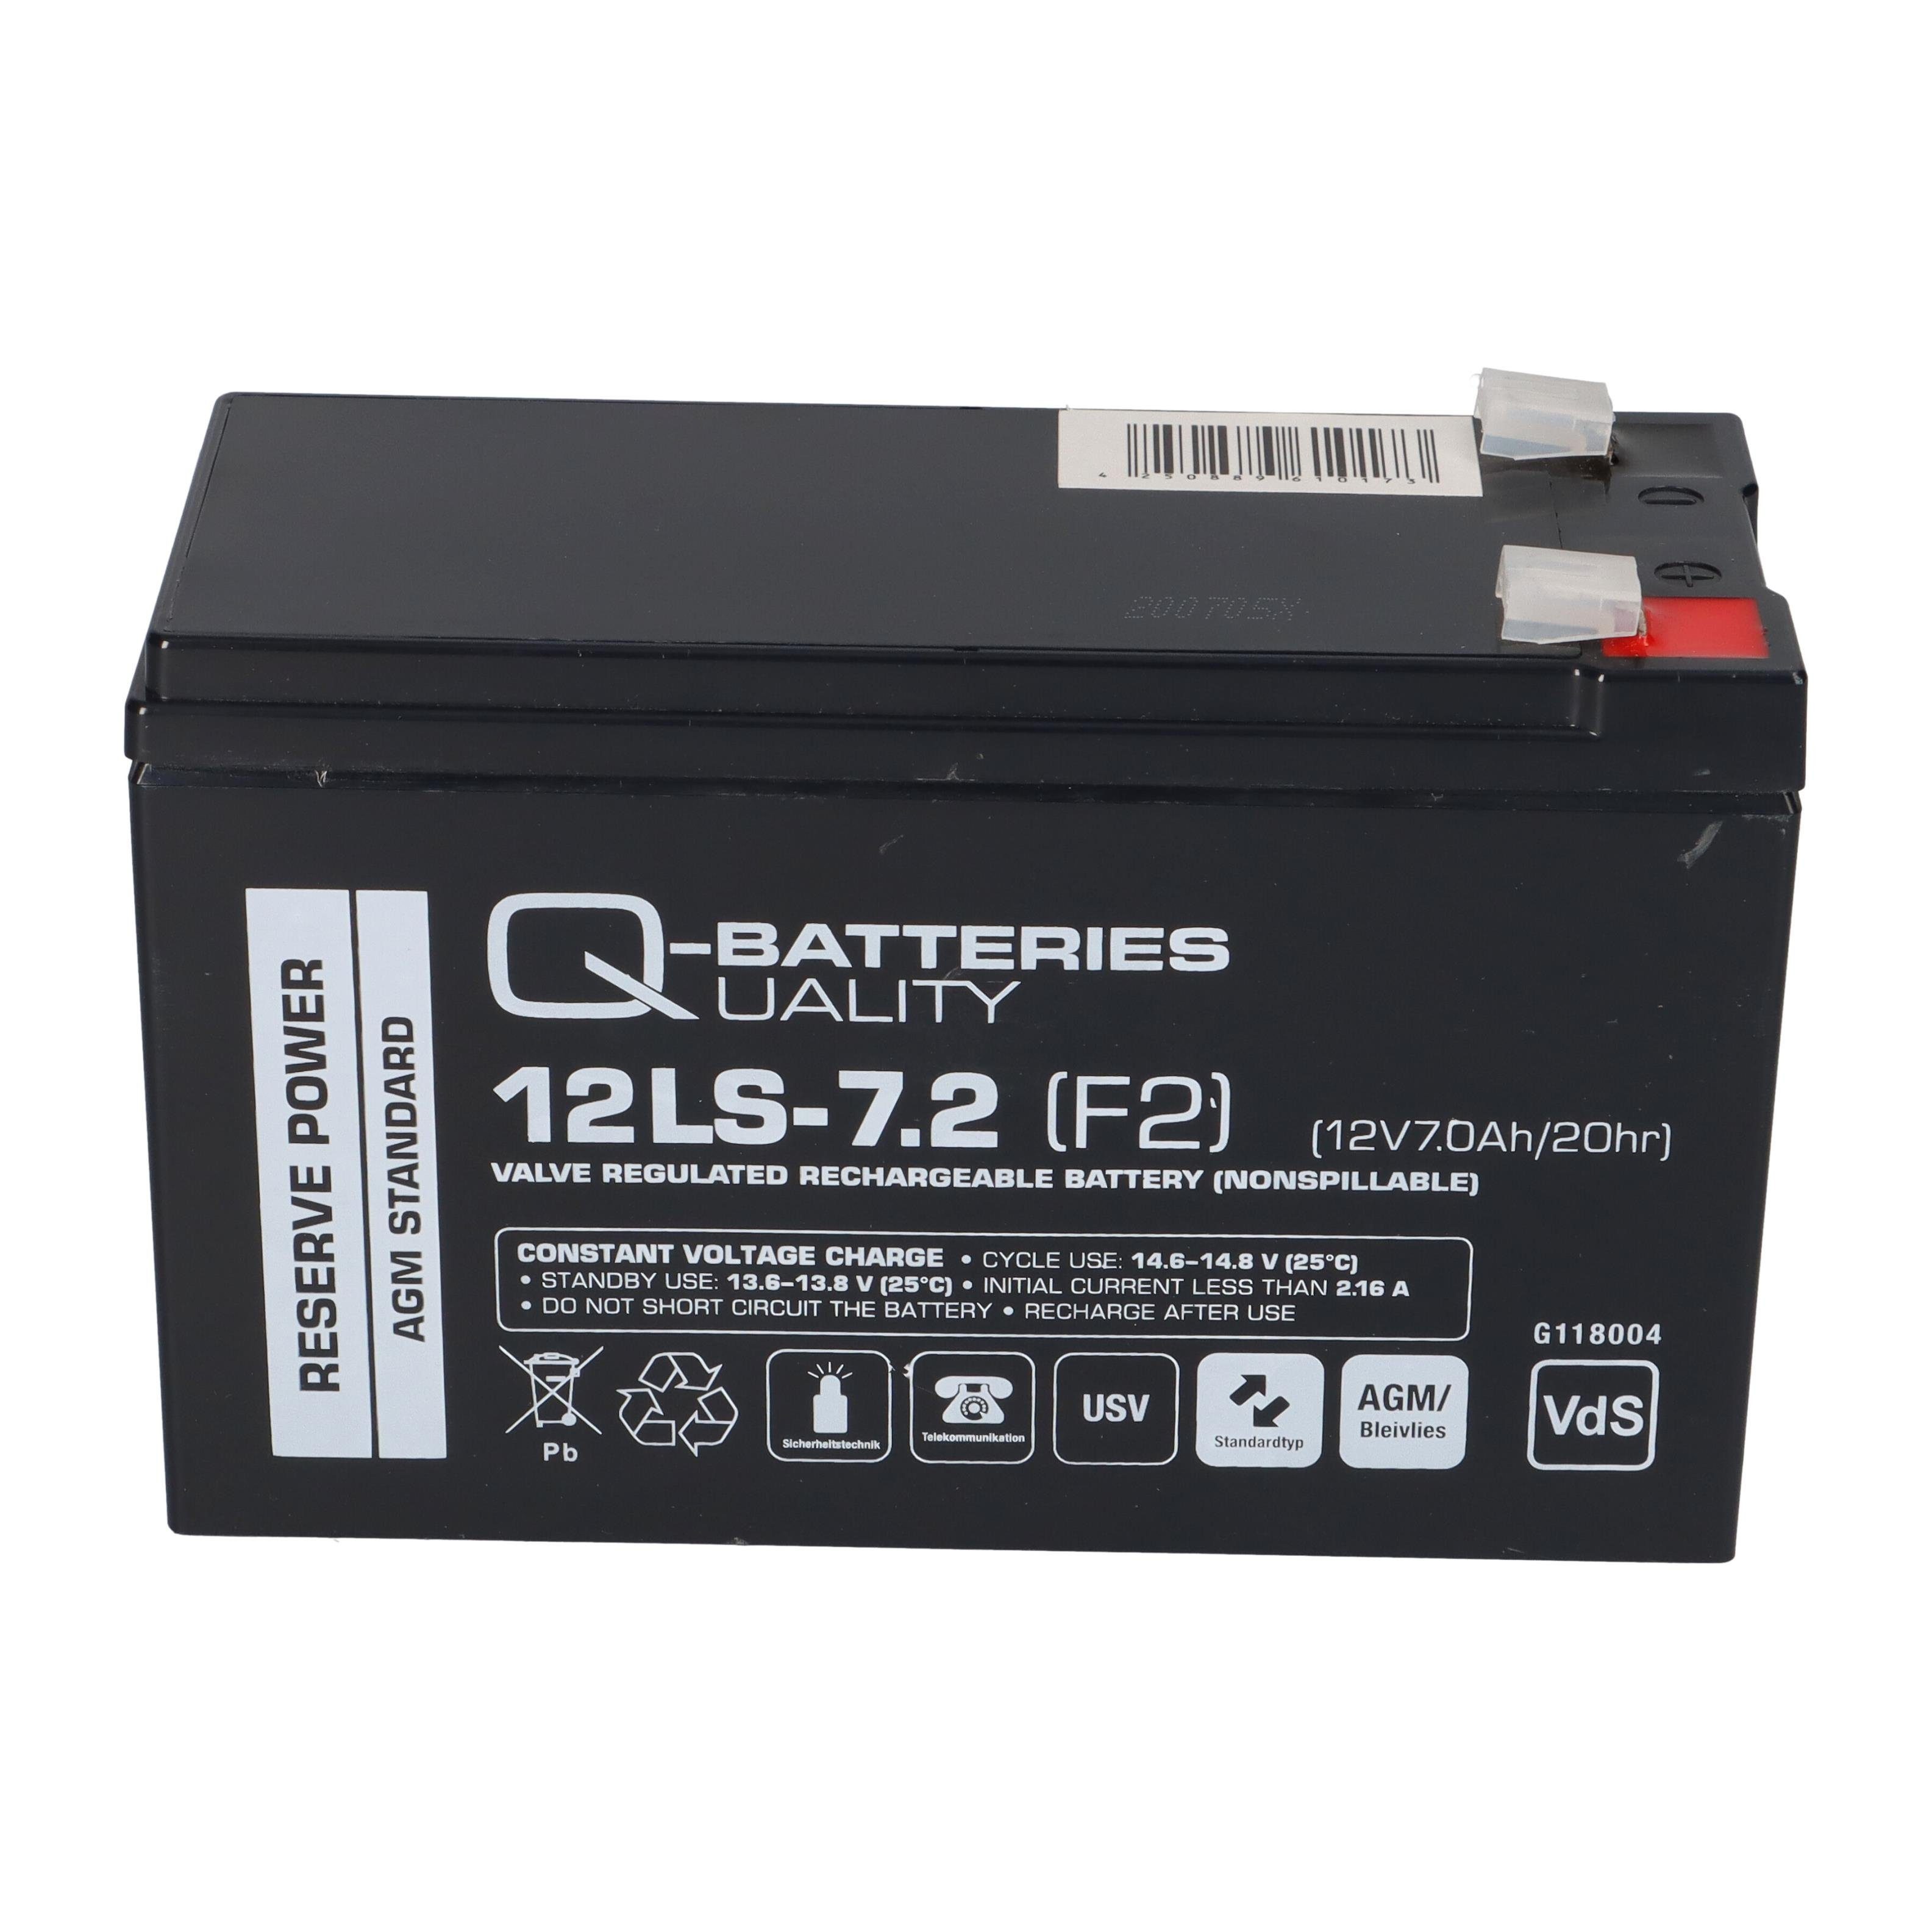 Q-Batteries F2 12LS-7.2 VRLA Q-Batteries 7,2Ah VdS Bleiakkus / mit AGM 12V Blei-Vlies-Akku